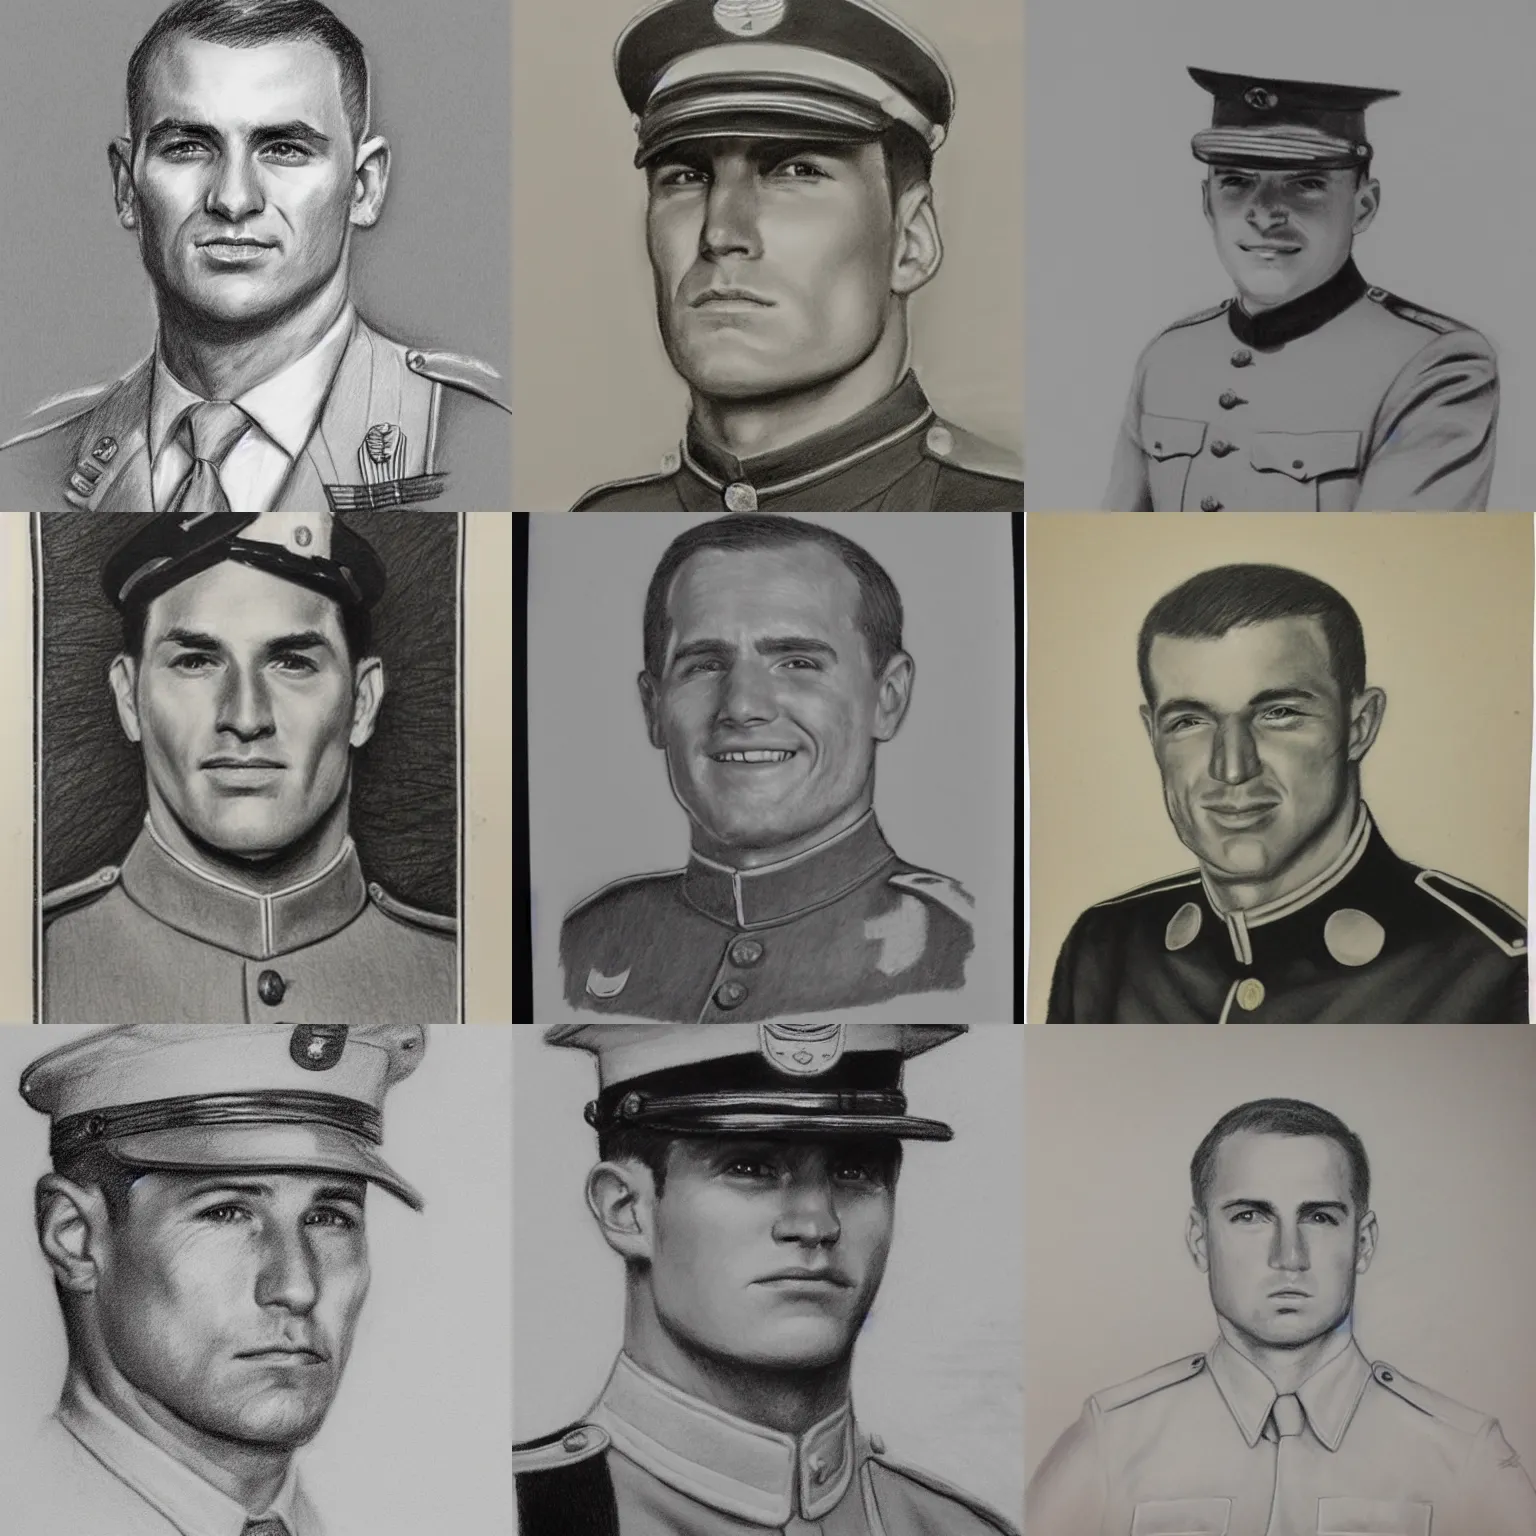 Prompt: a pencil sketch portrait of joseph manzella, united states marine corps